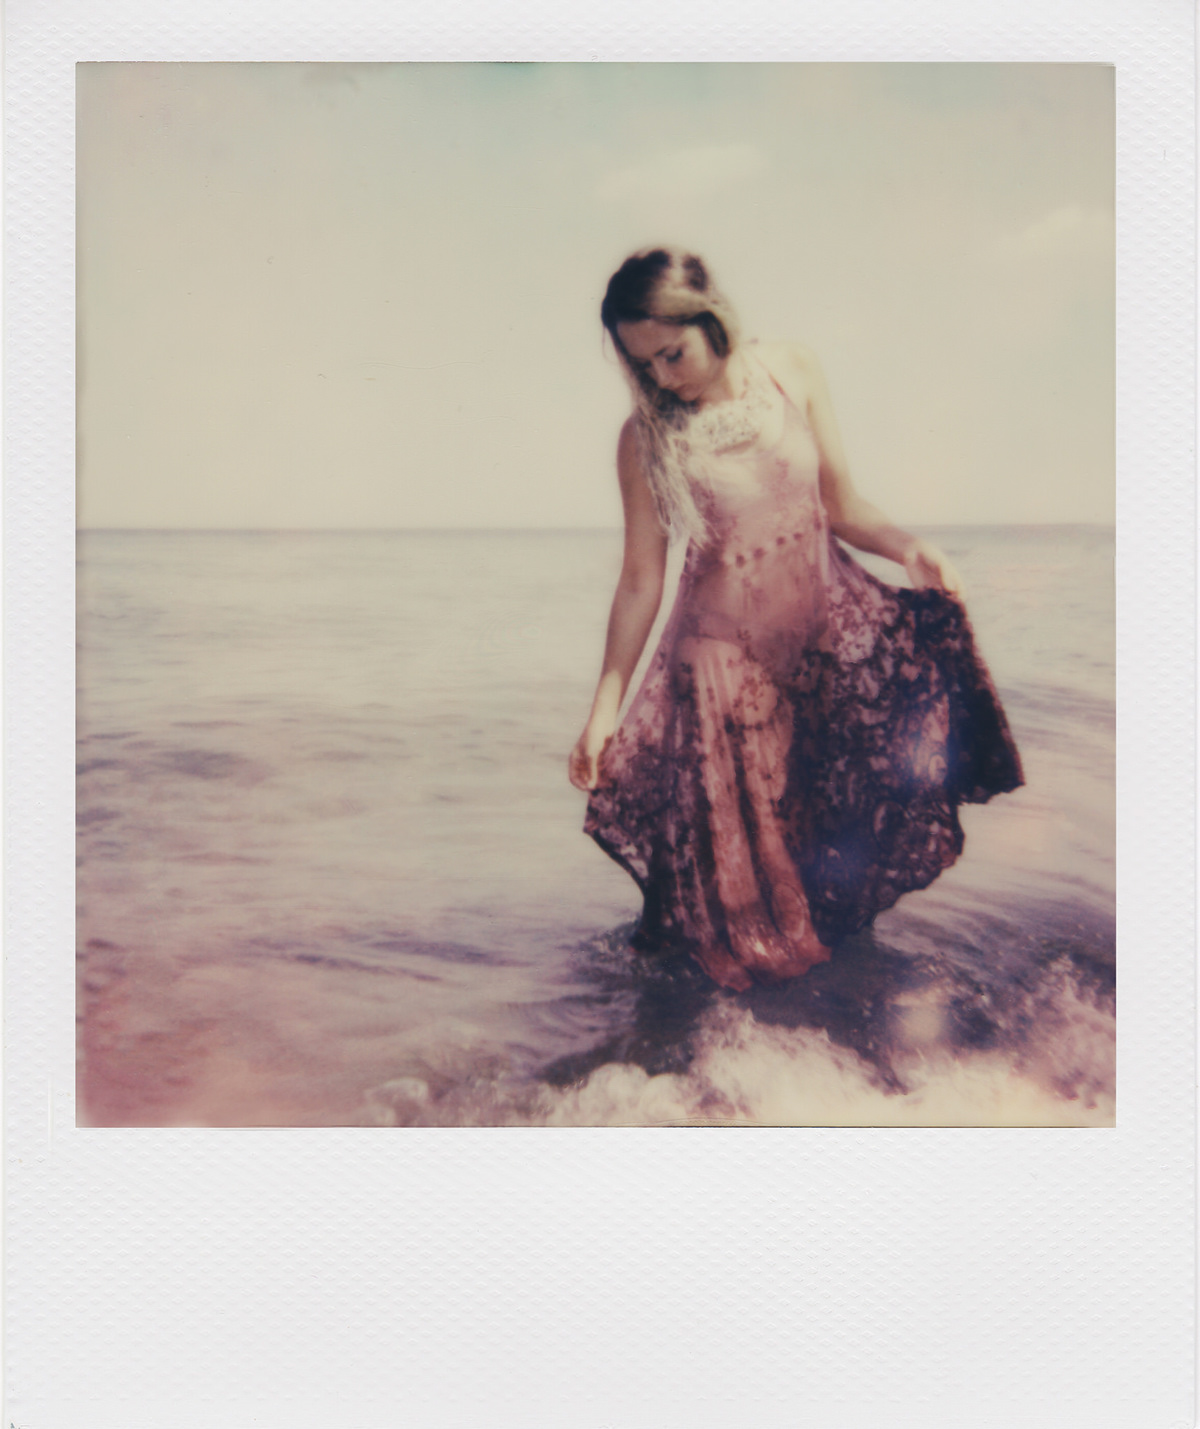 laurel guido fashion design SAIC girl editorial styling  siren water sand beach dress Film Camera POLAROID impossible summer